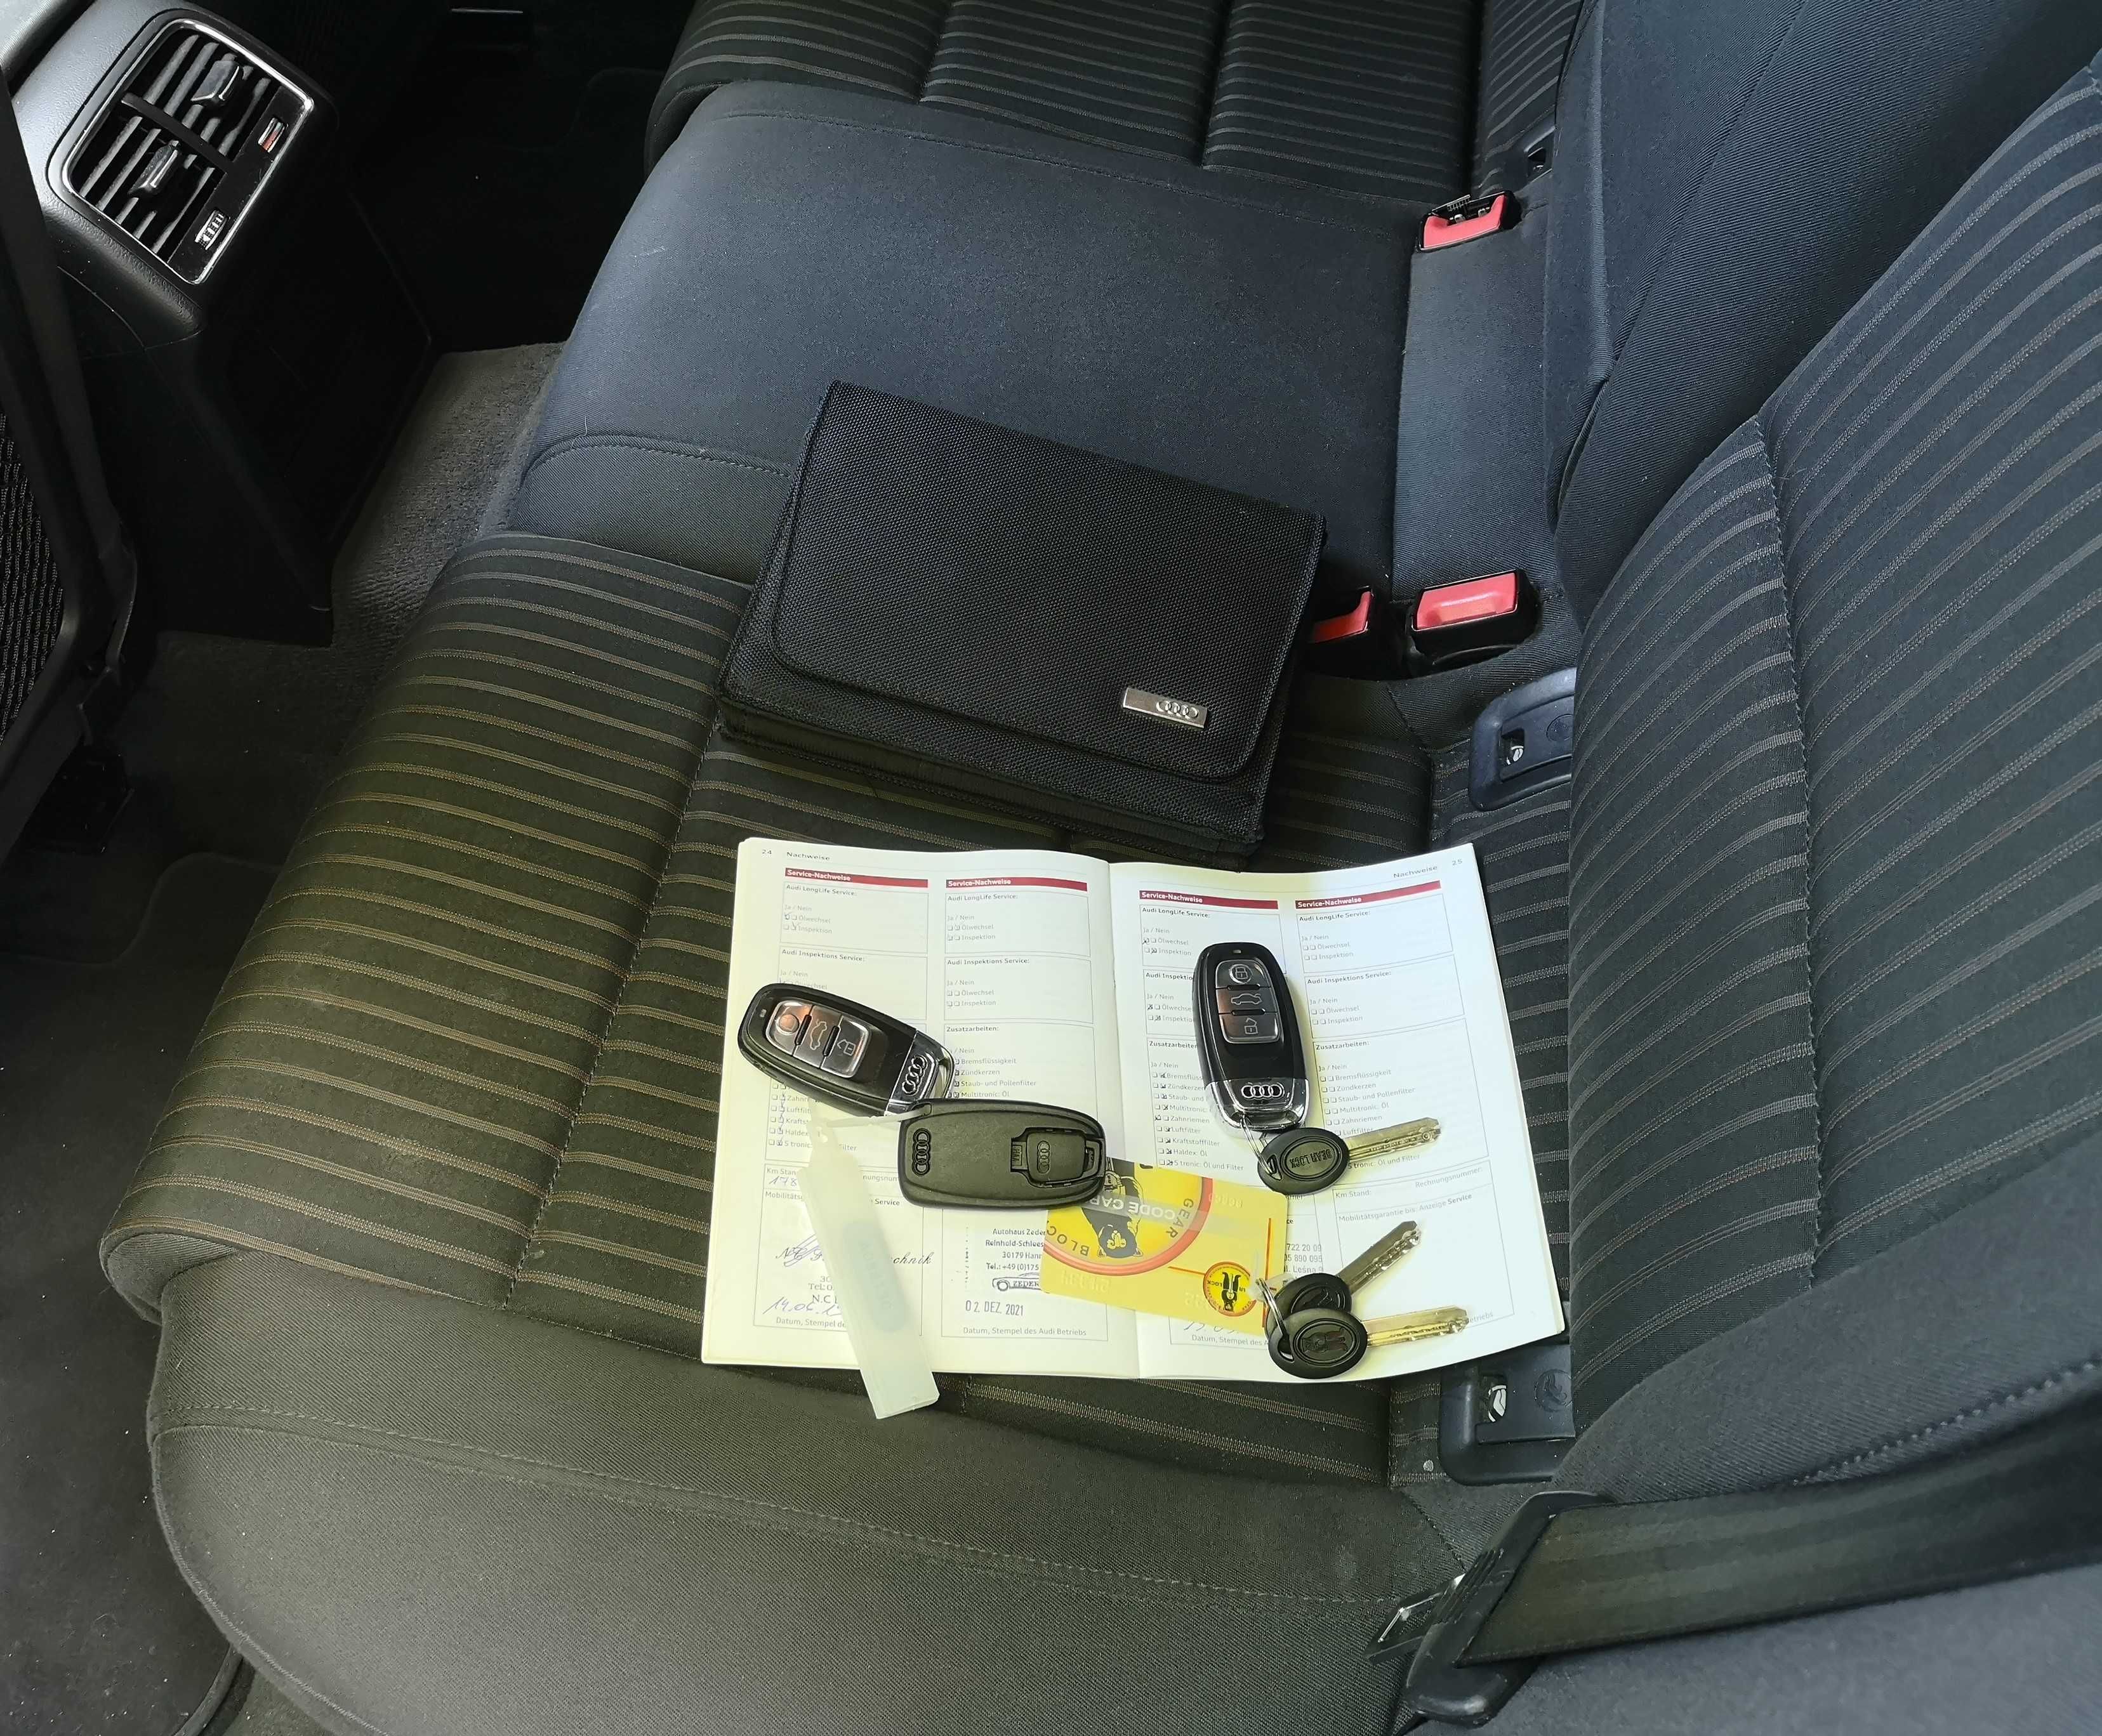 Audi A4B8 Lift mod.2013,Panorama,Radar/Akt.tempo,Navi3G+,Xenon/led,DPF